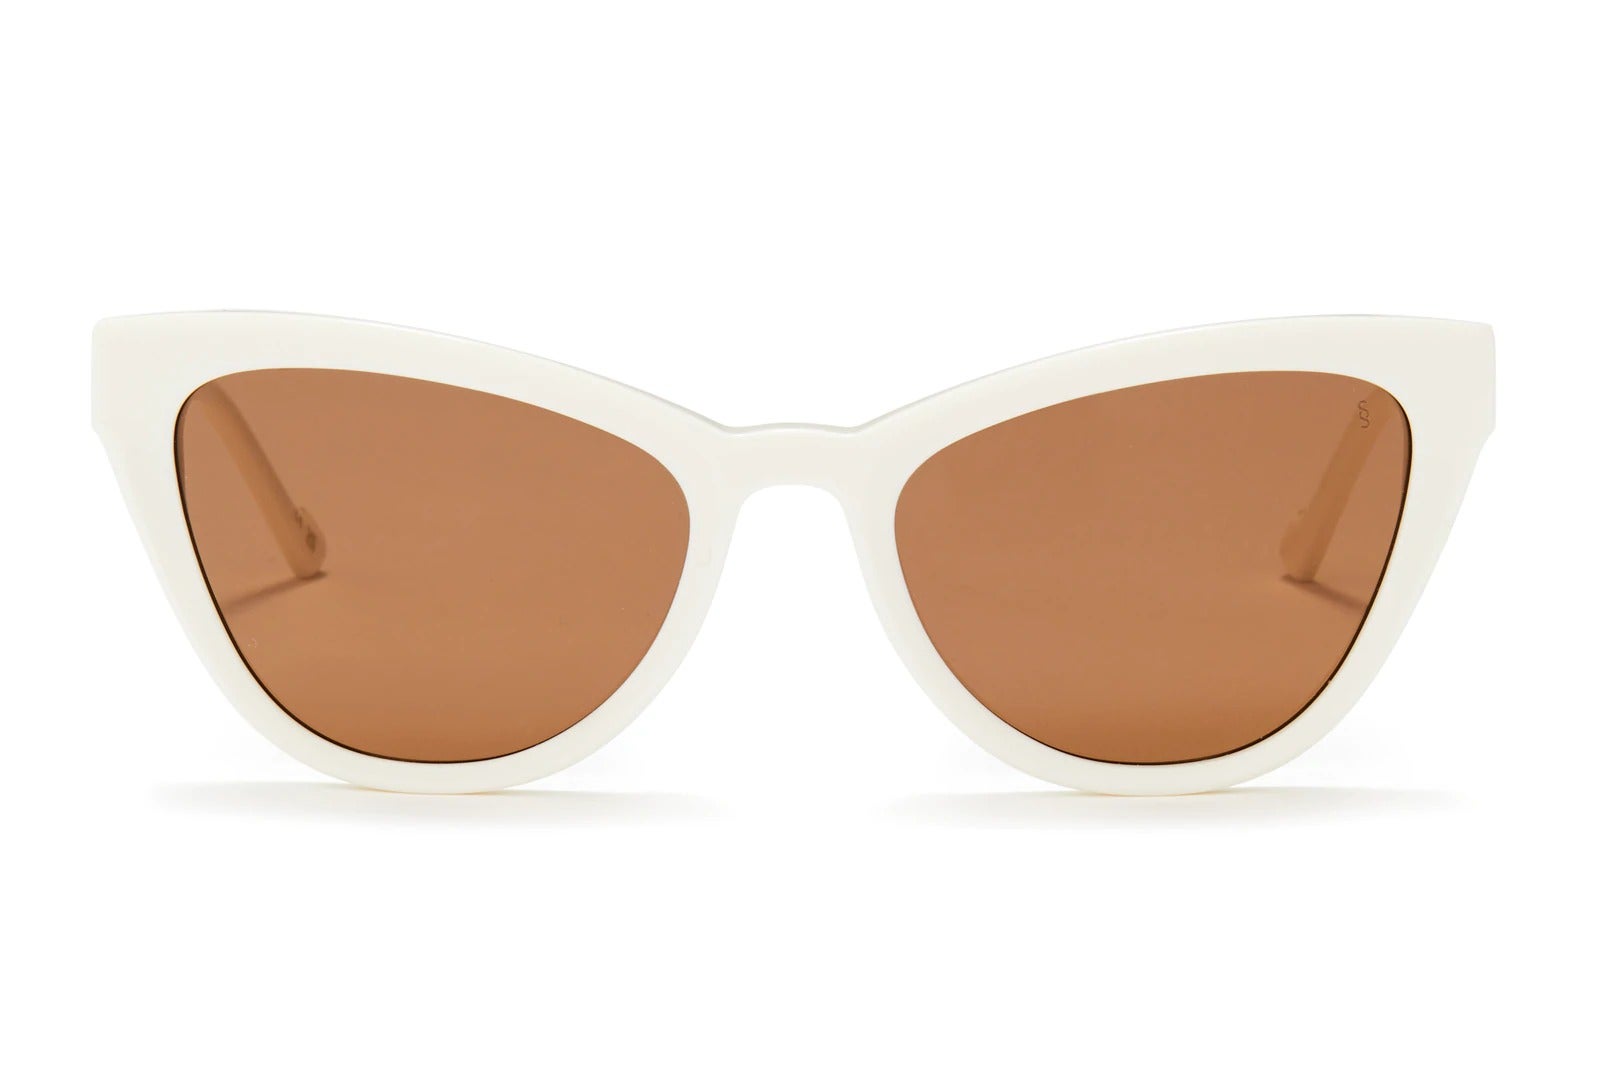 Sojos + SOJOS Retro Round Sunglasses for Women Oversized Mirrored 